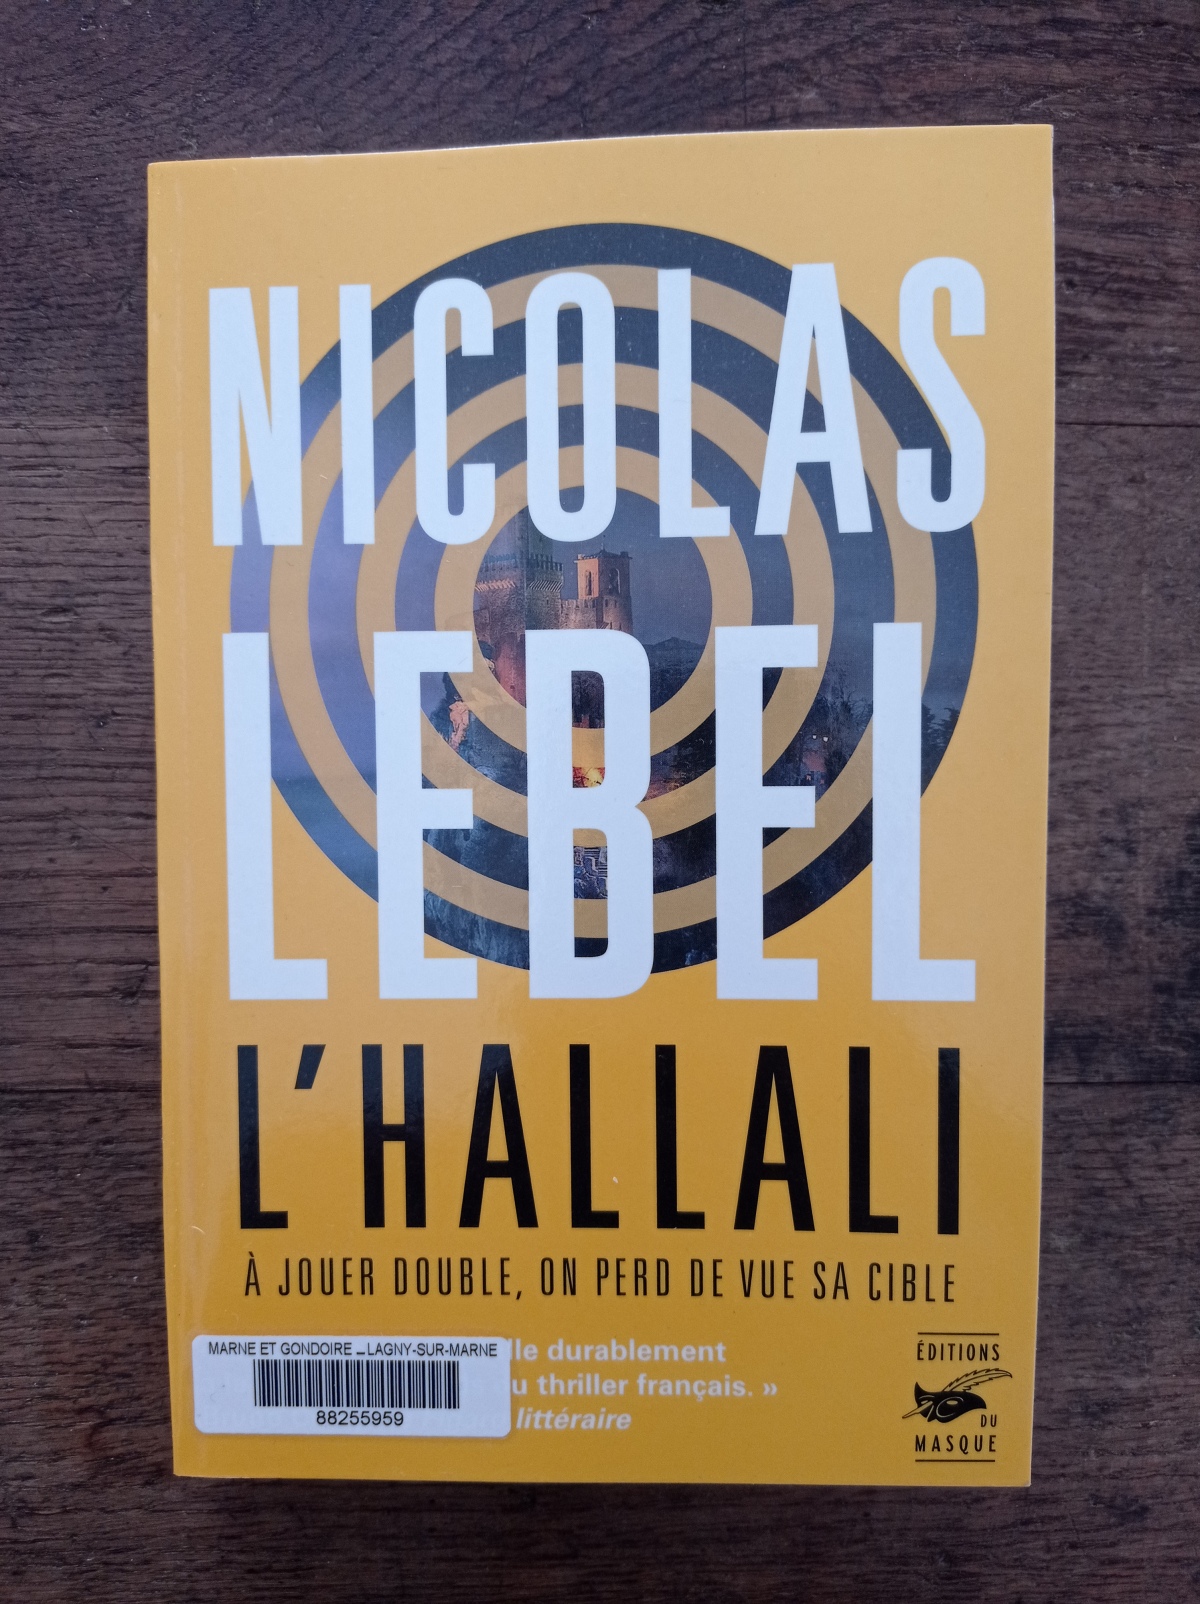 L’Hallali / Nicolas Lebel